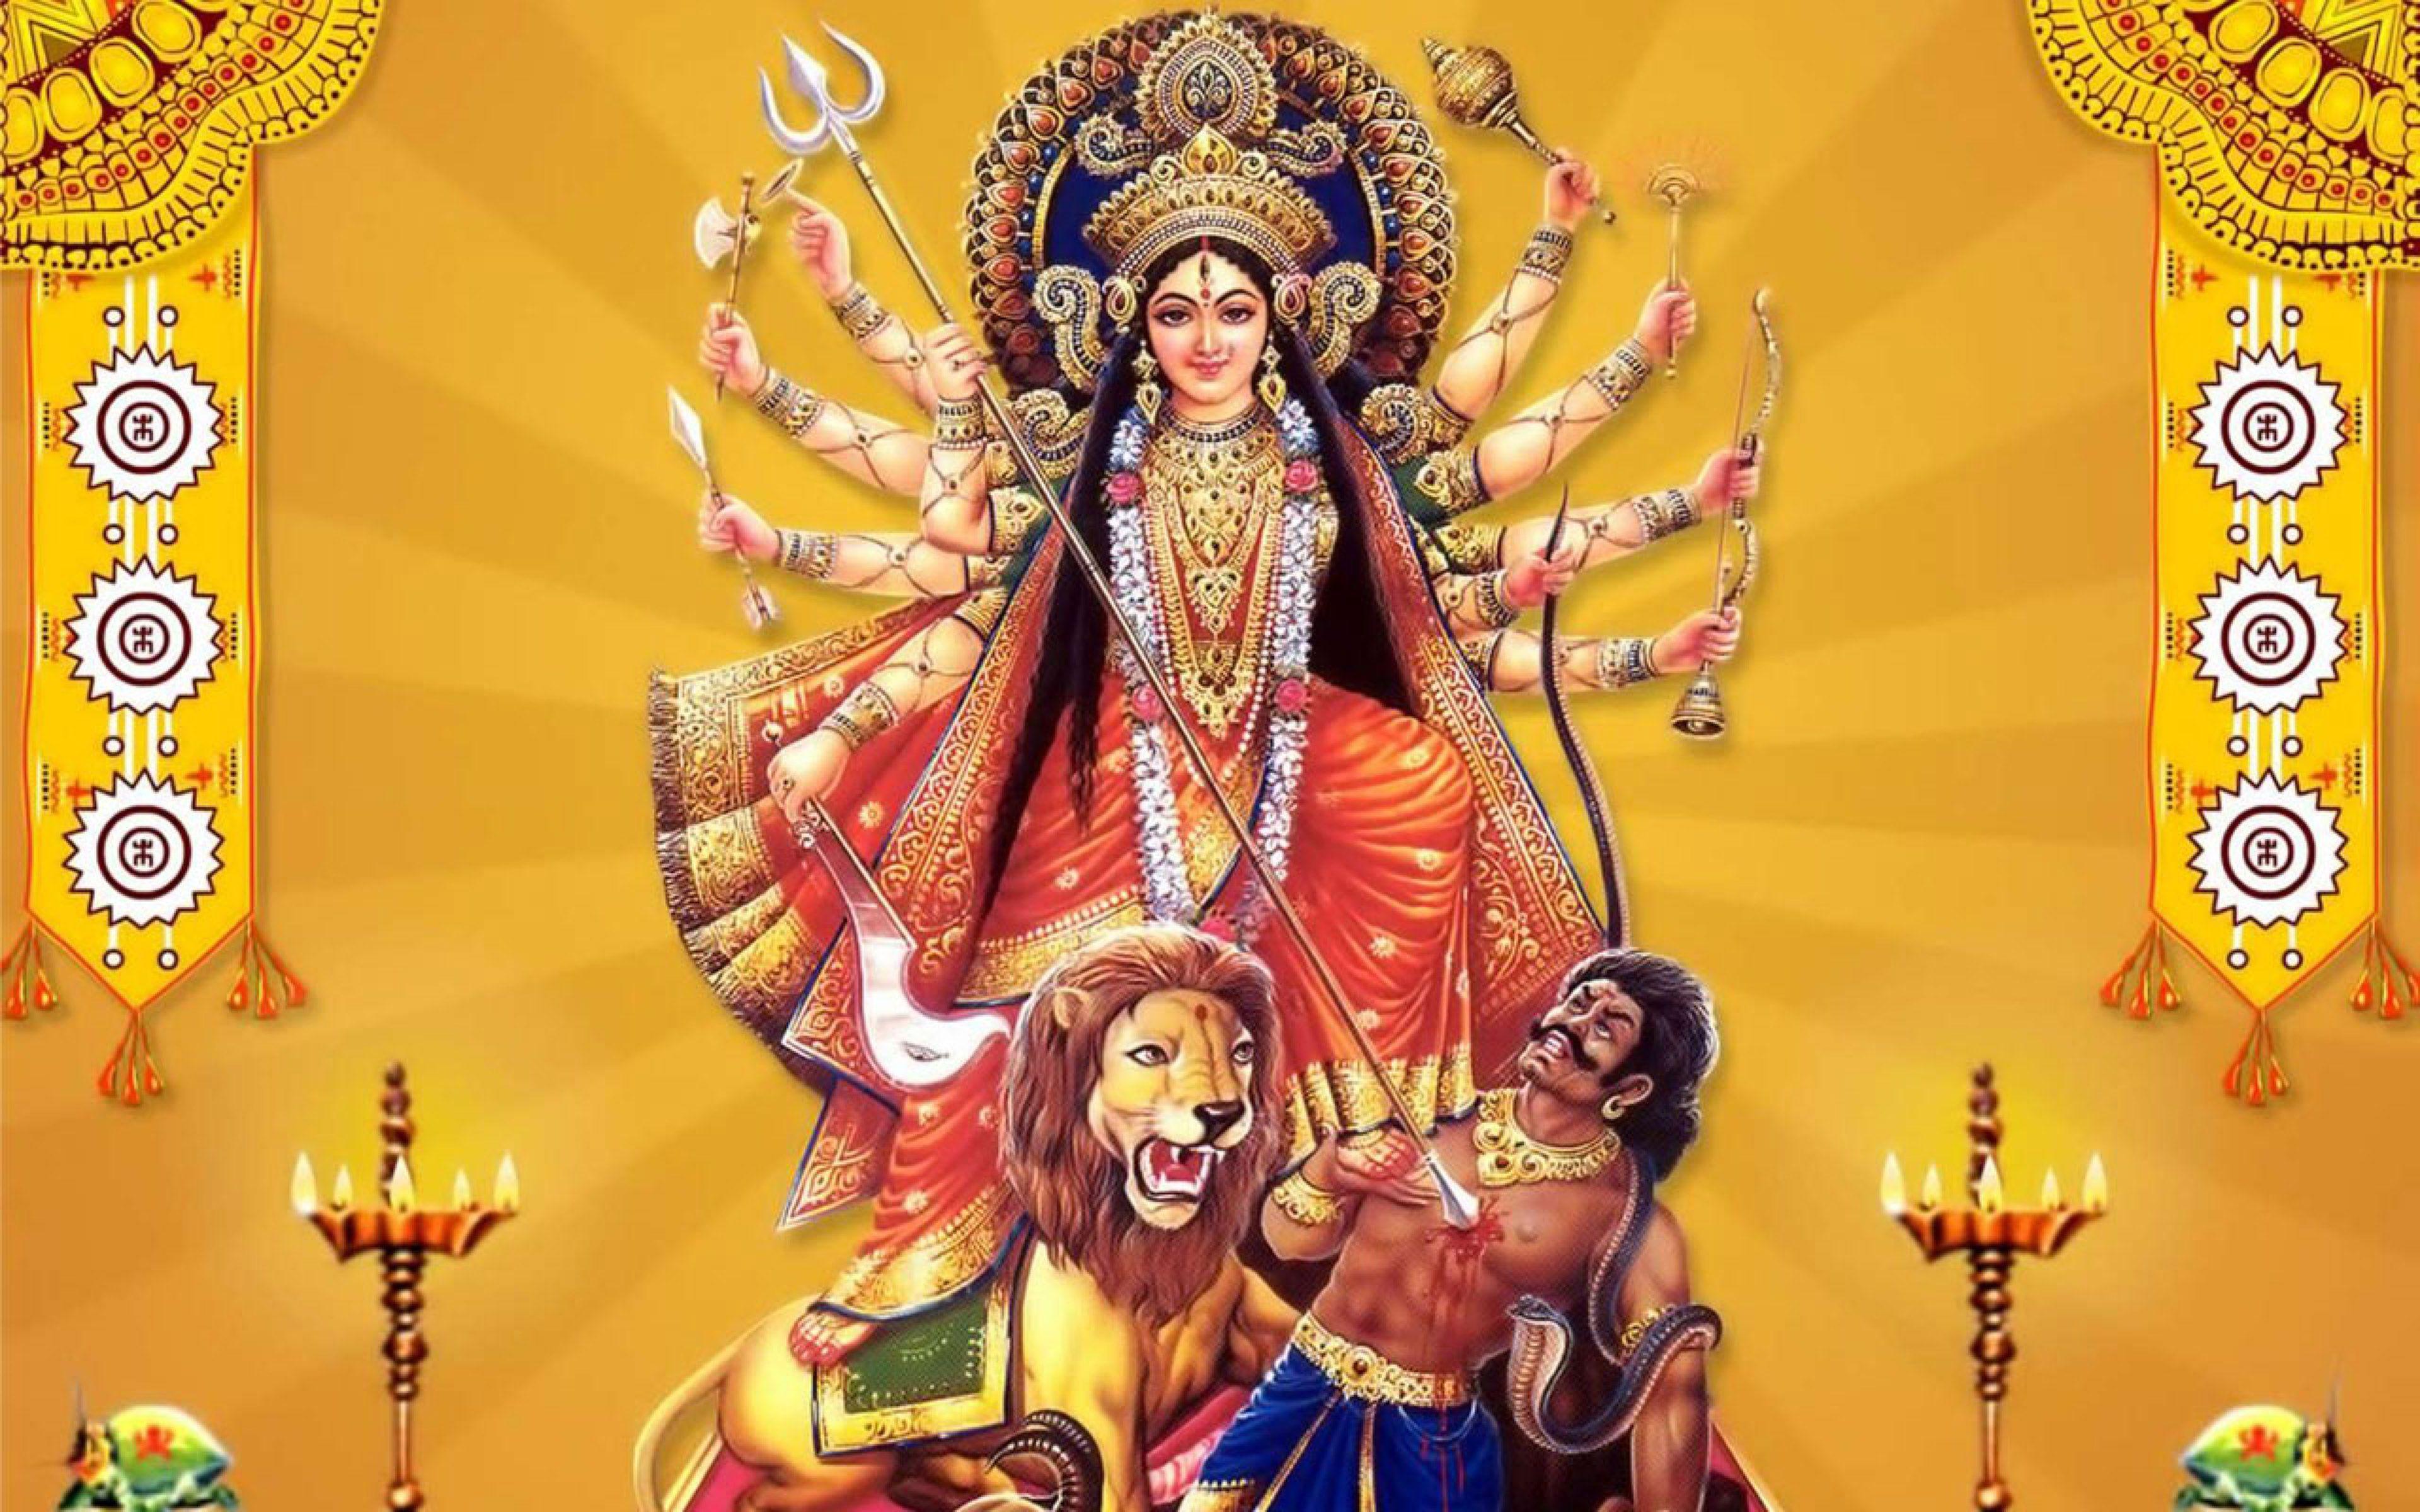 750 Durga Pictures  Download Free Images on Unsplash